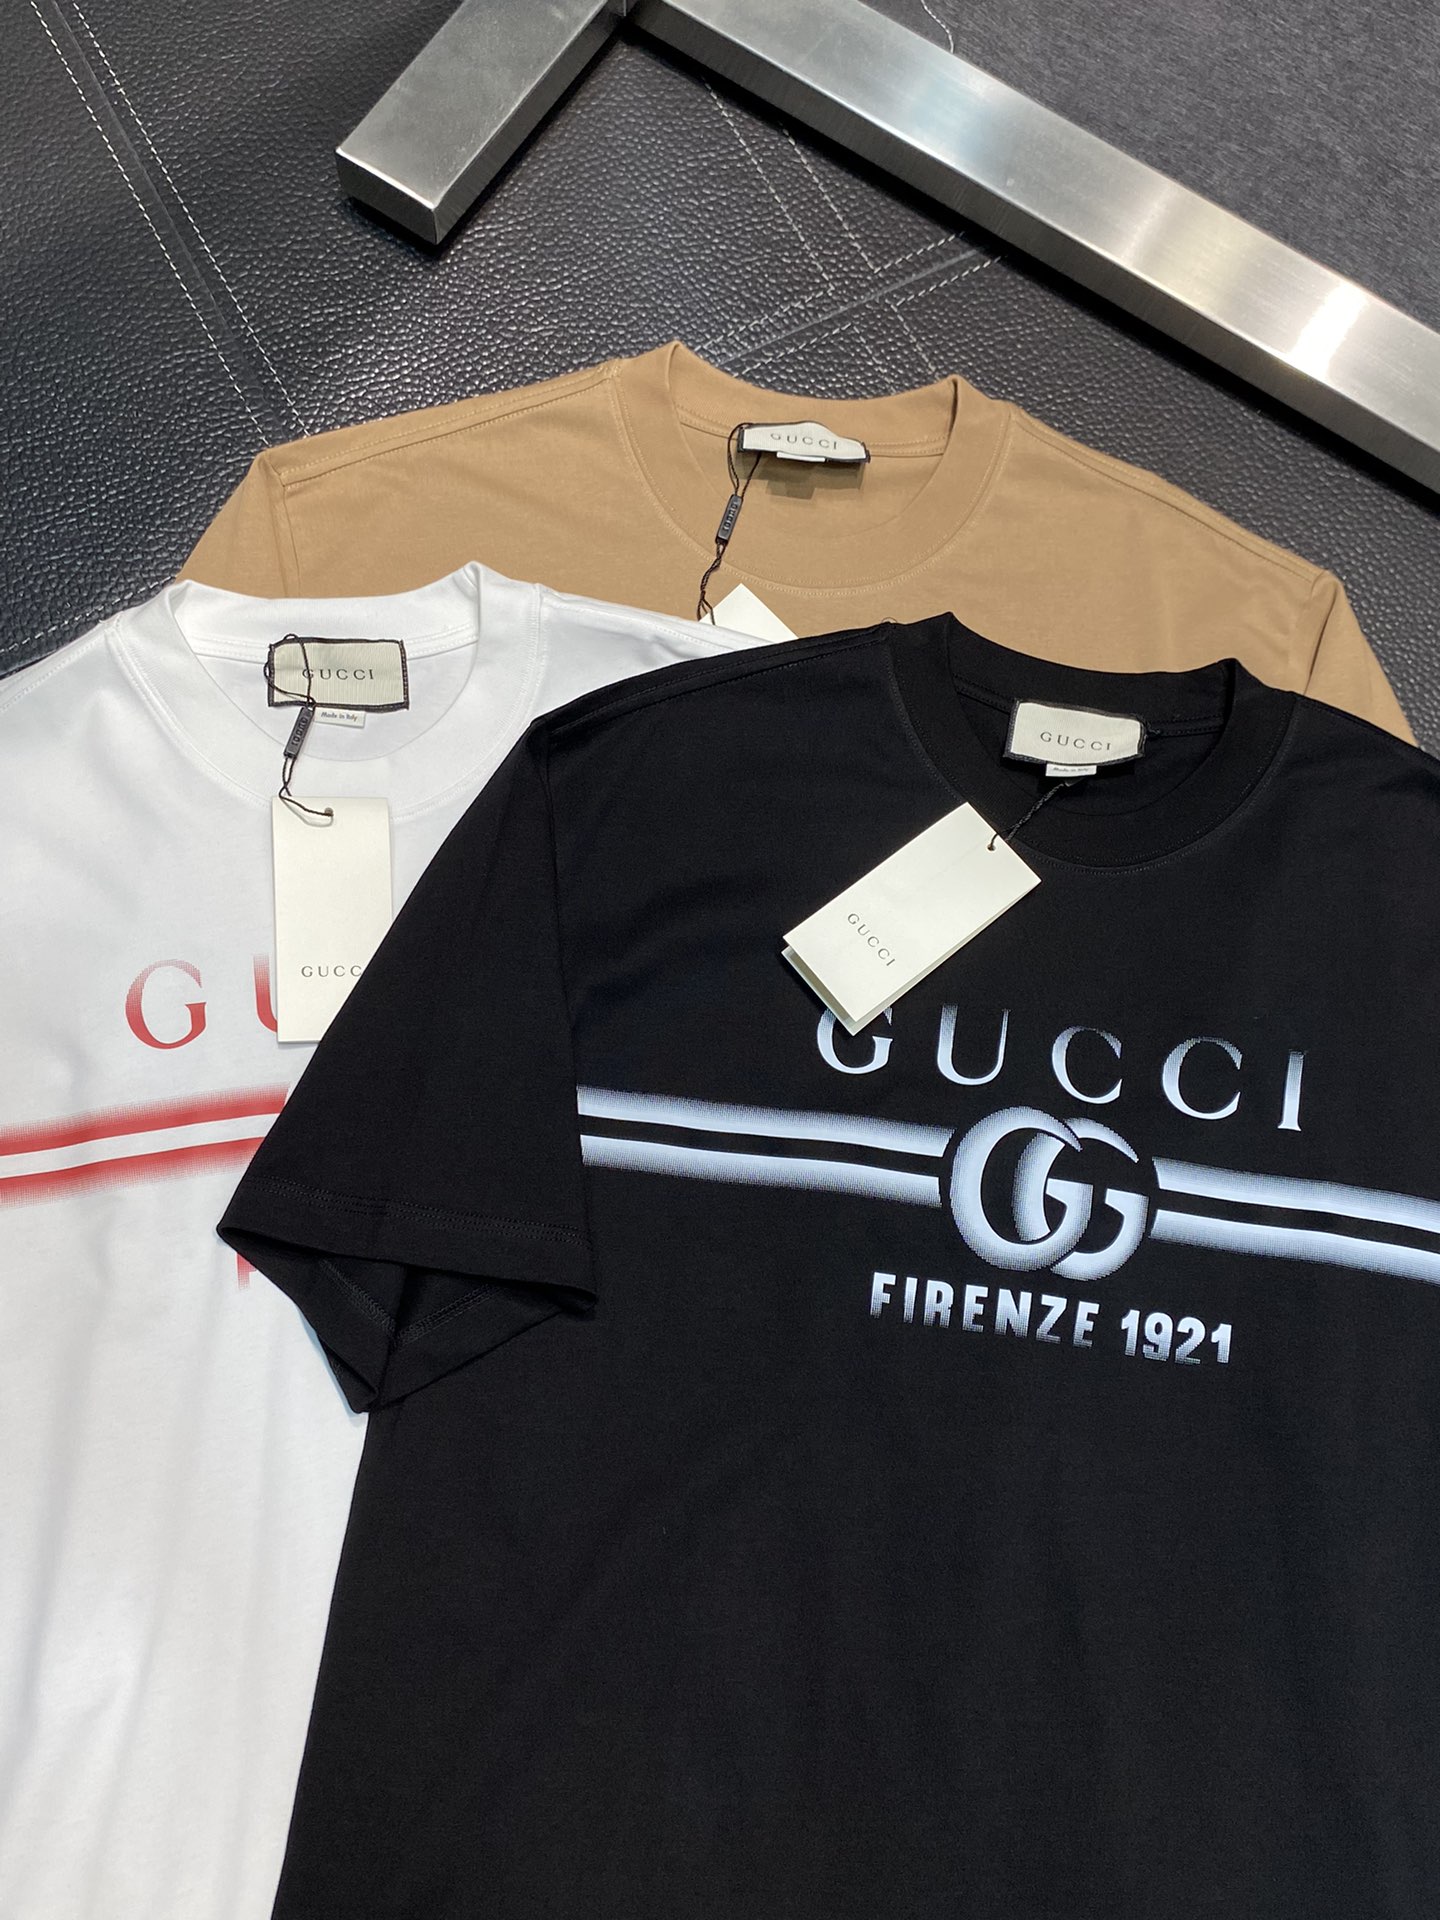 Gucci Perfect
 Clothing T-Shirt Men Fashion Short Sleeve